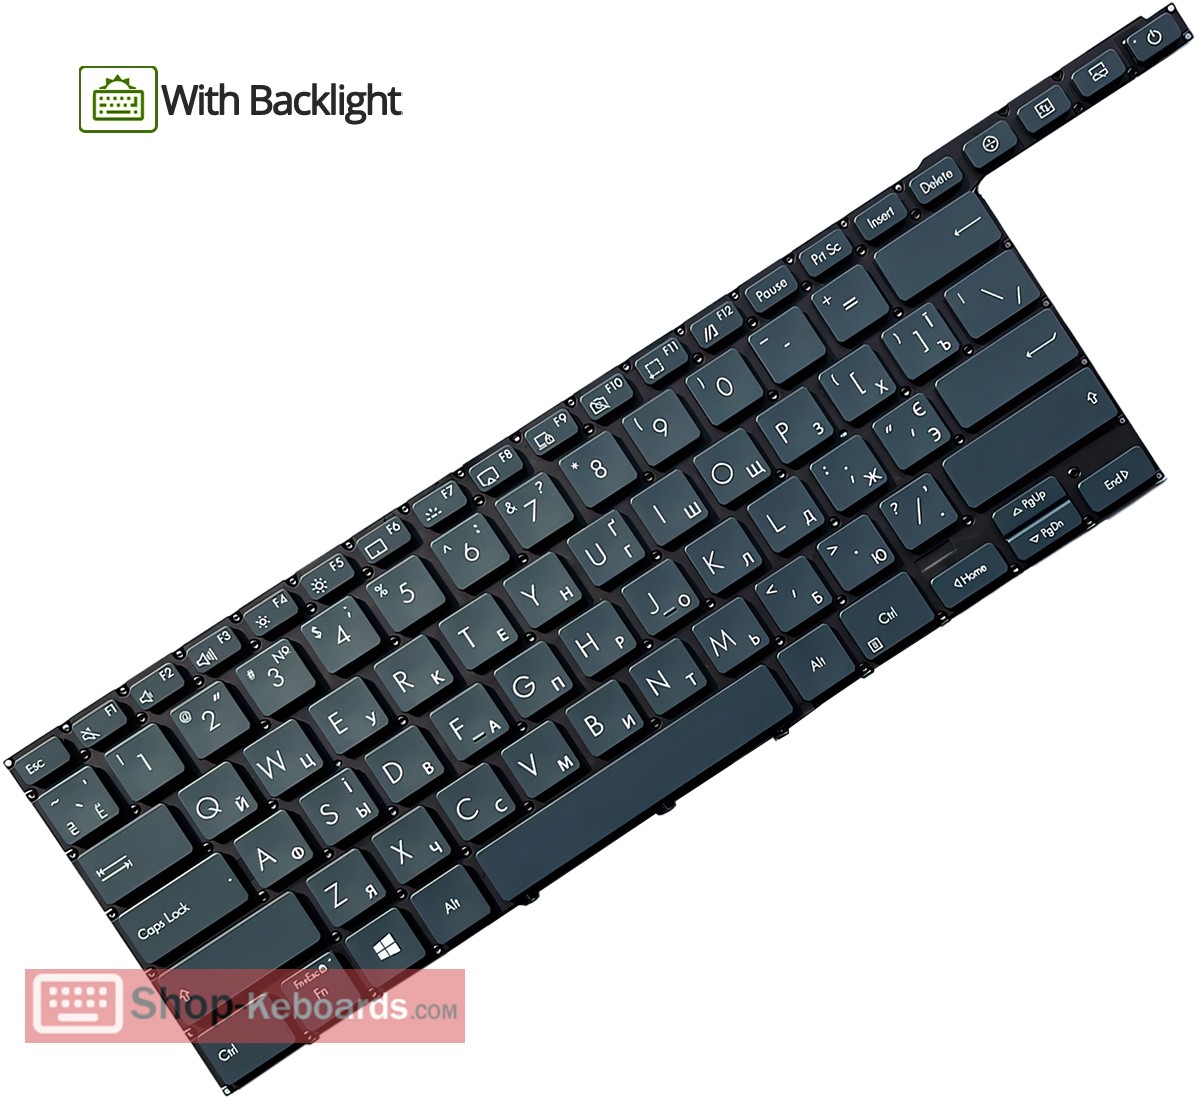 Asus 0KNB0-6823UK00 Keyboard replacement